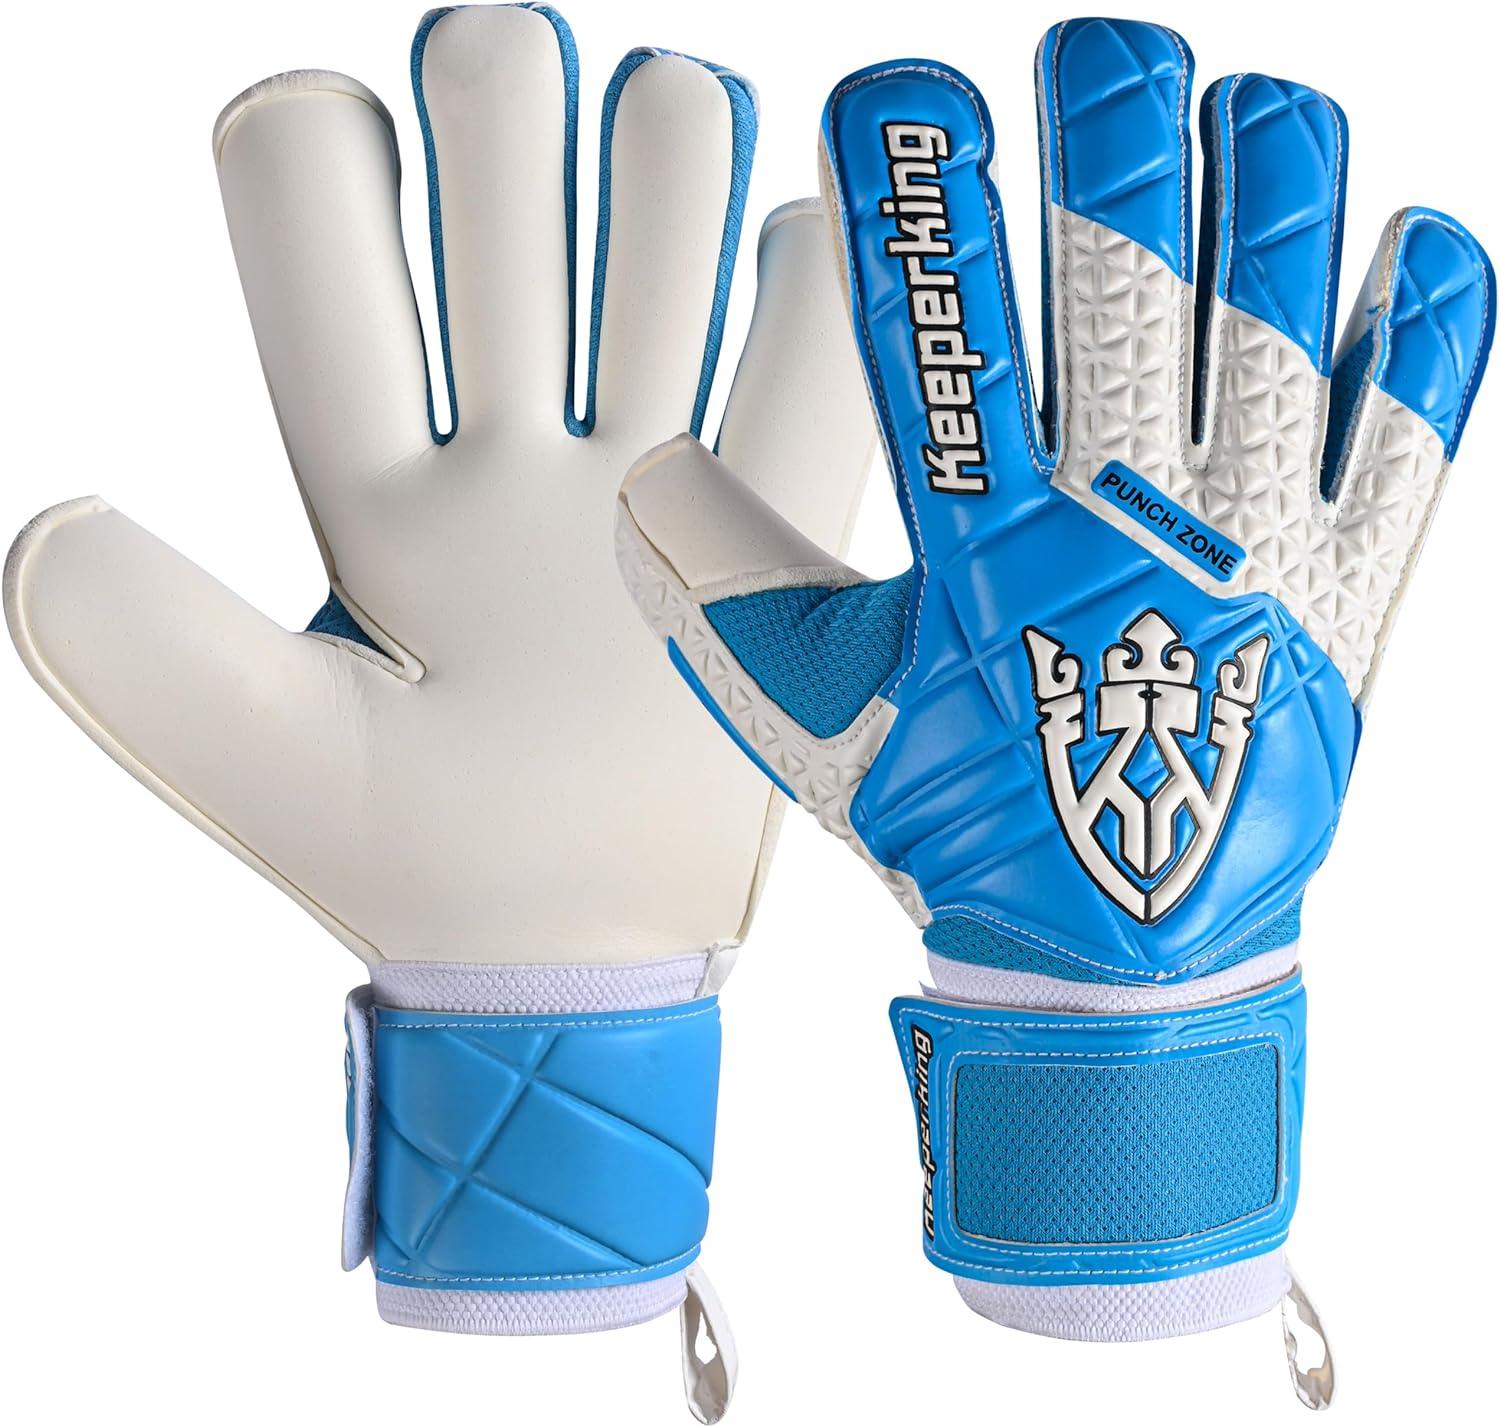 Cyan SP 2.0 children's goalkeeper gloves